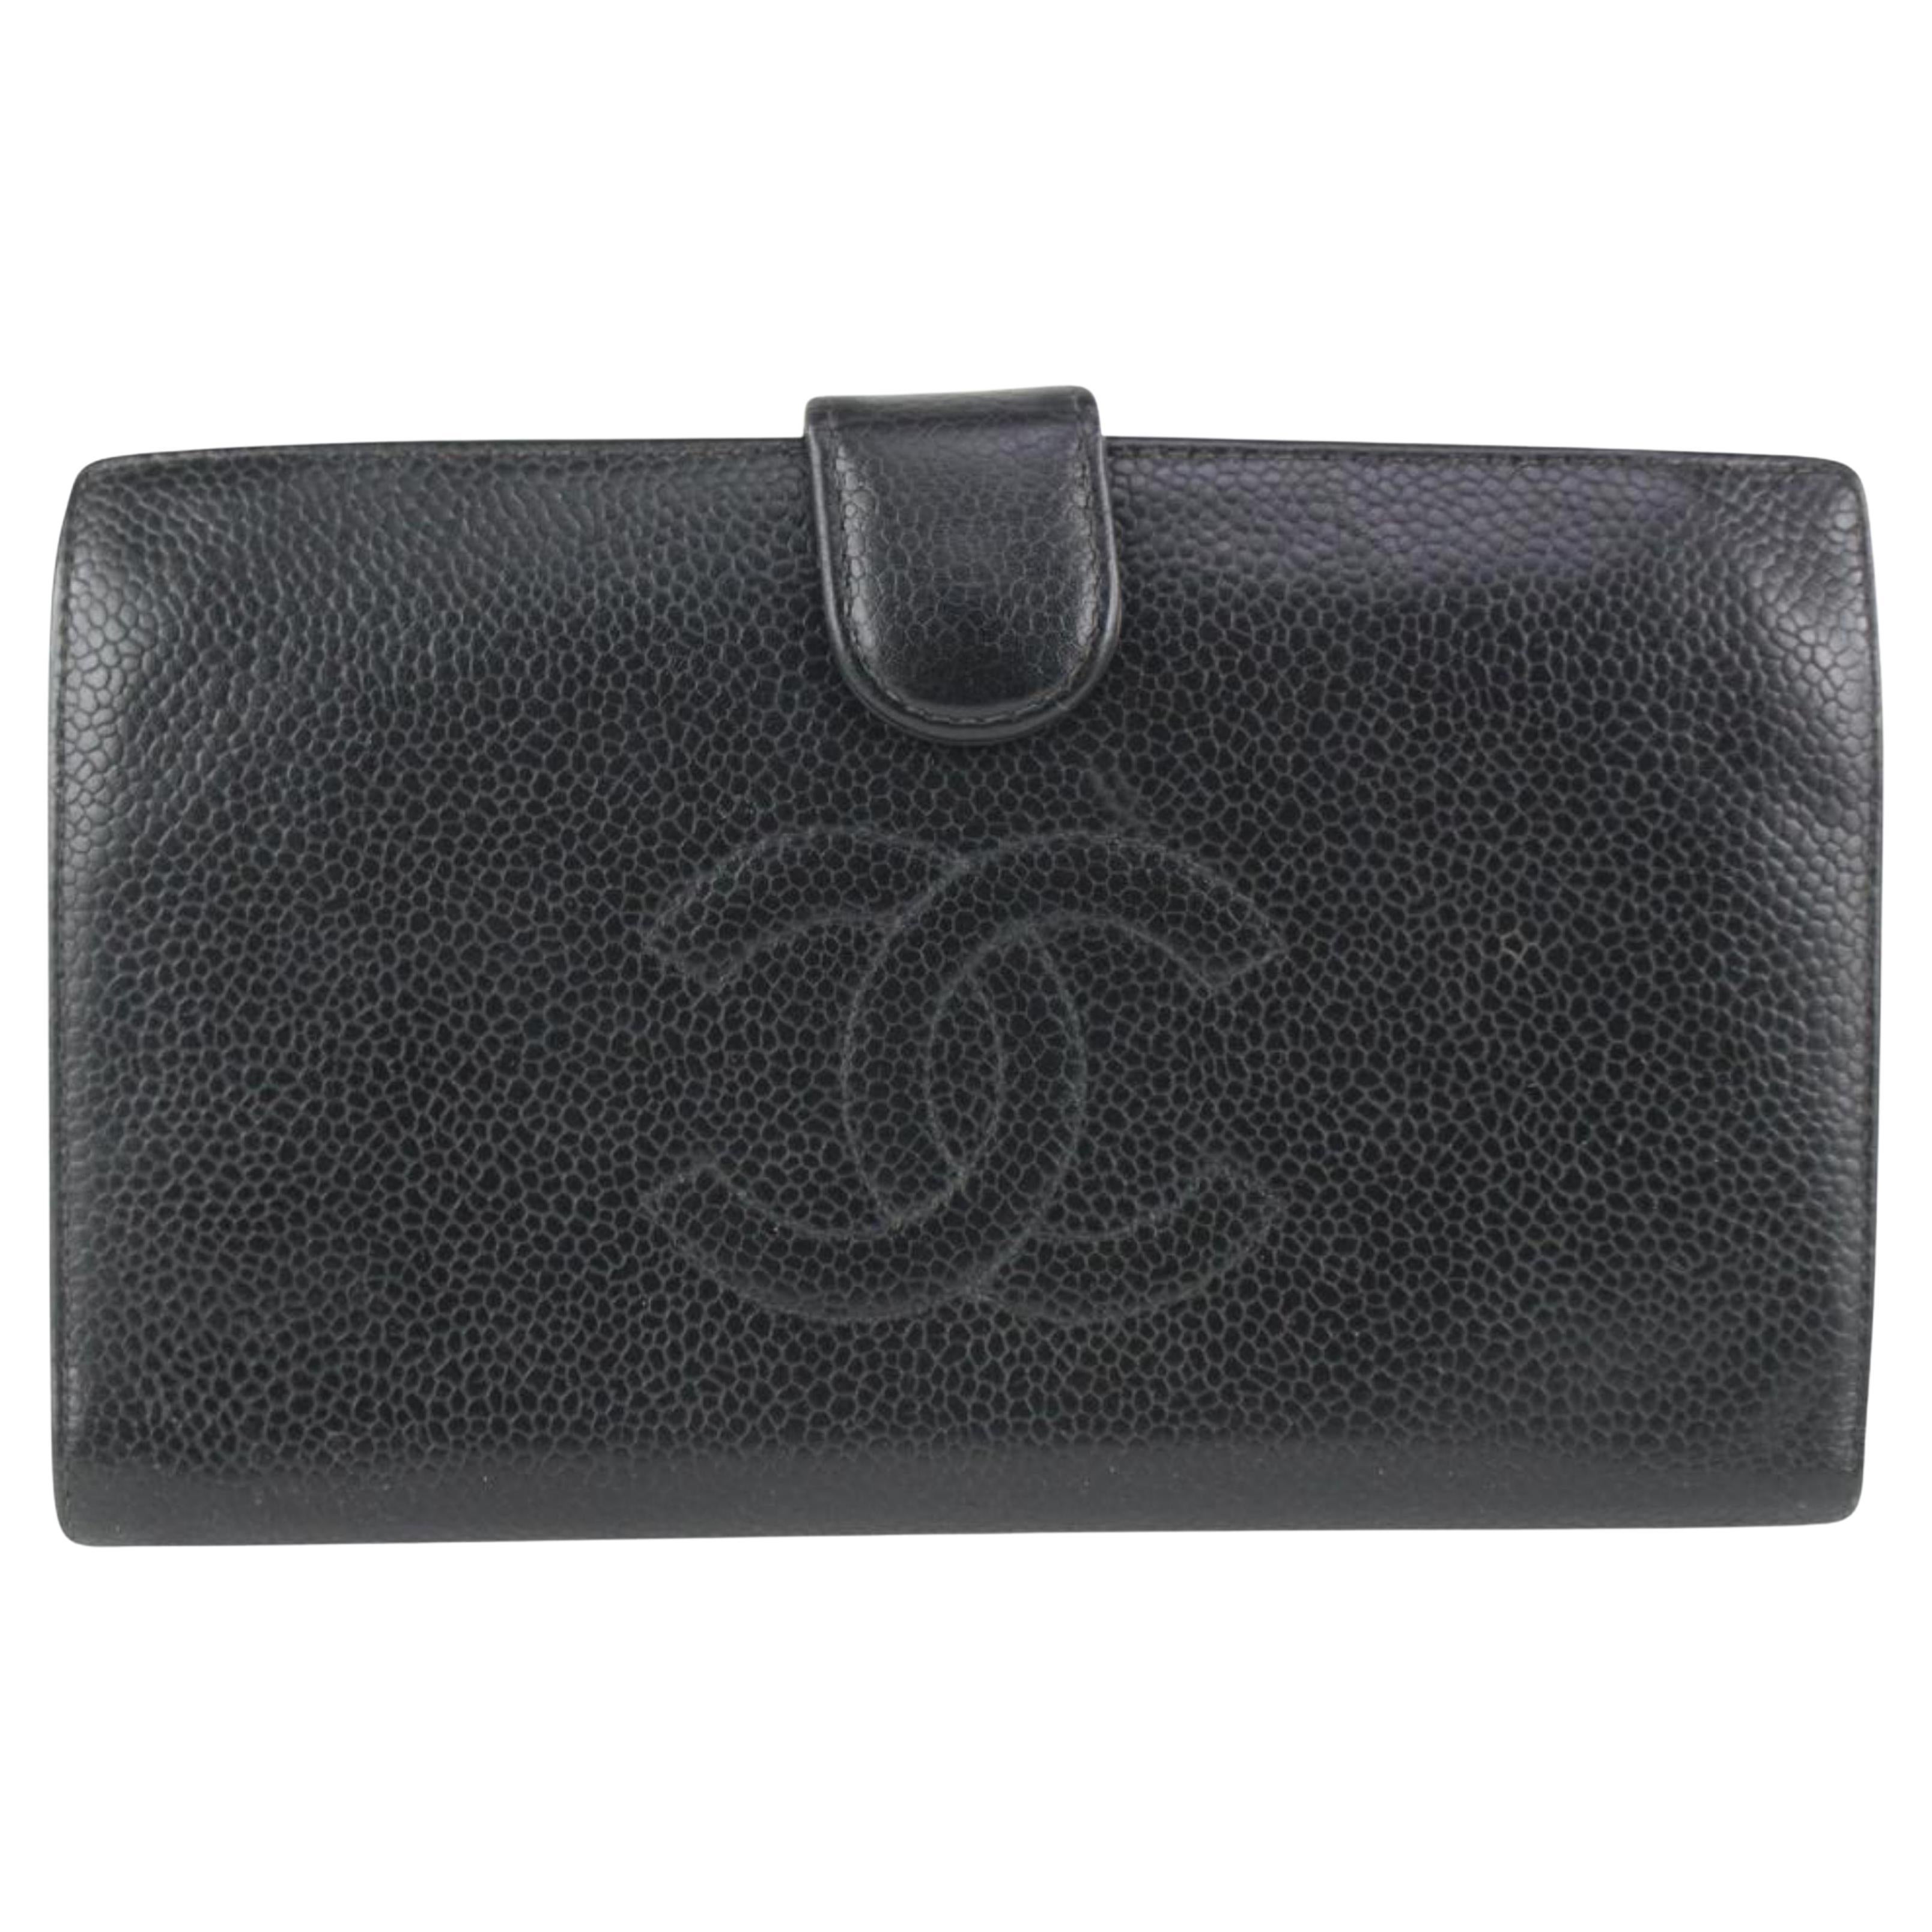 Chanel Black Caviar Leather CC Logo Long Wallet 122c2 For Sale